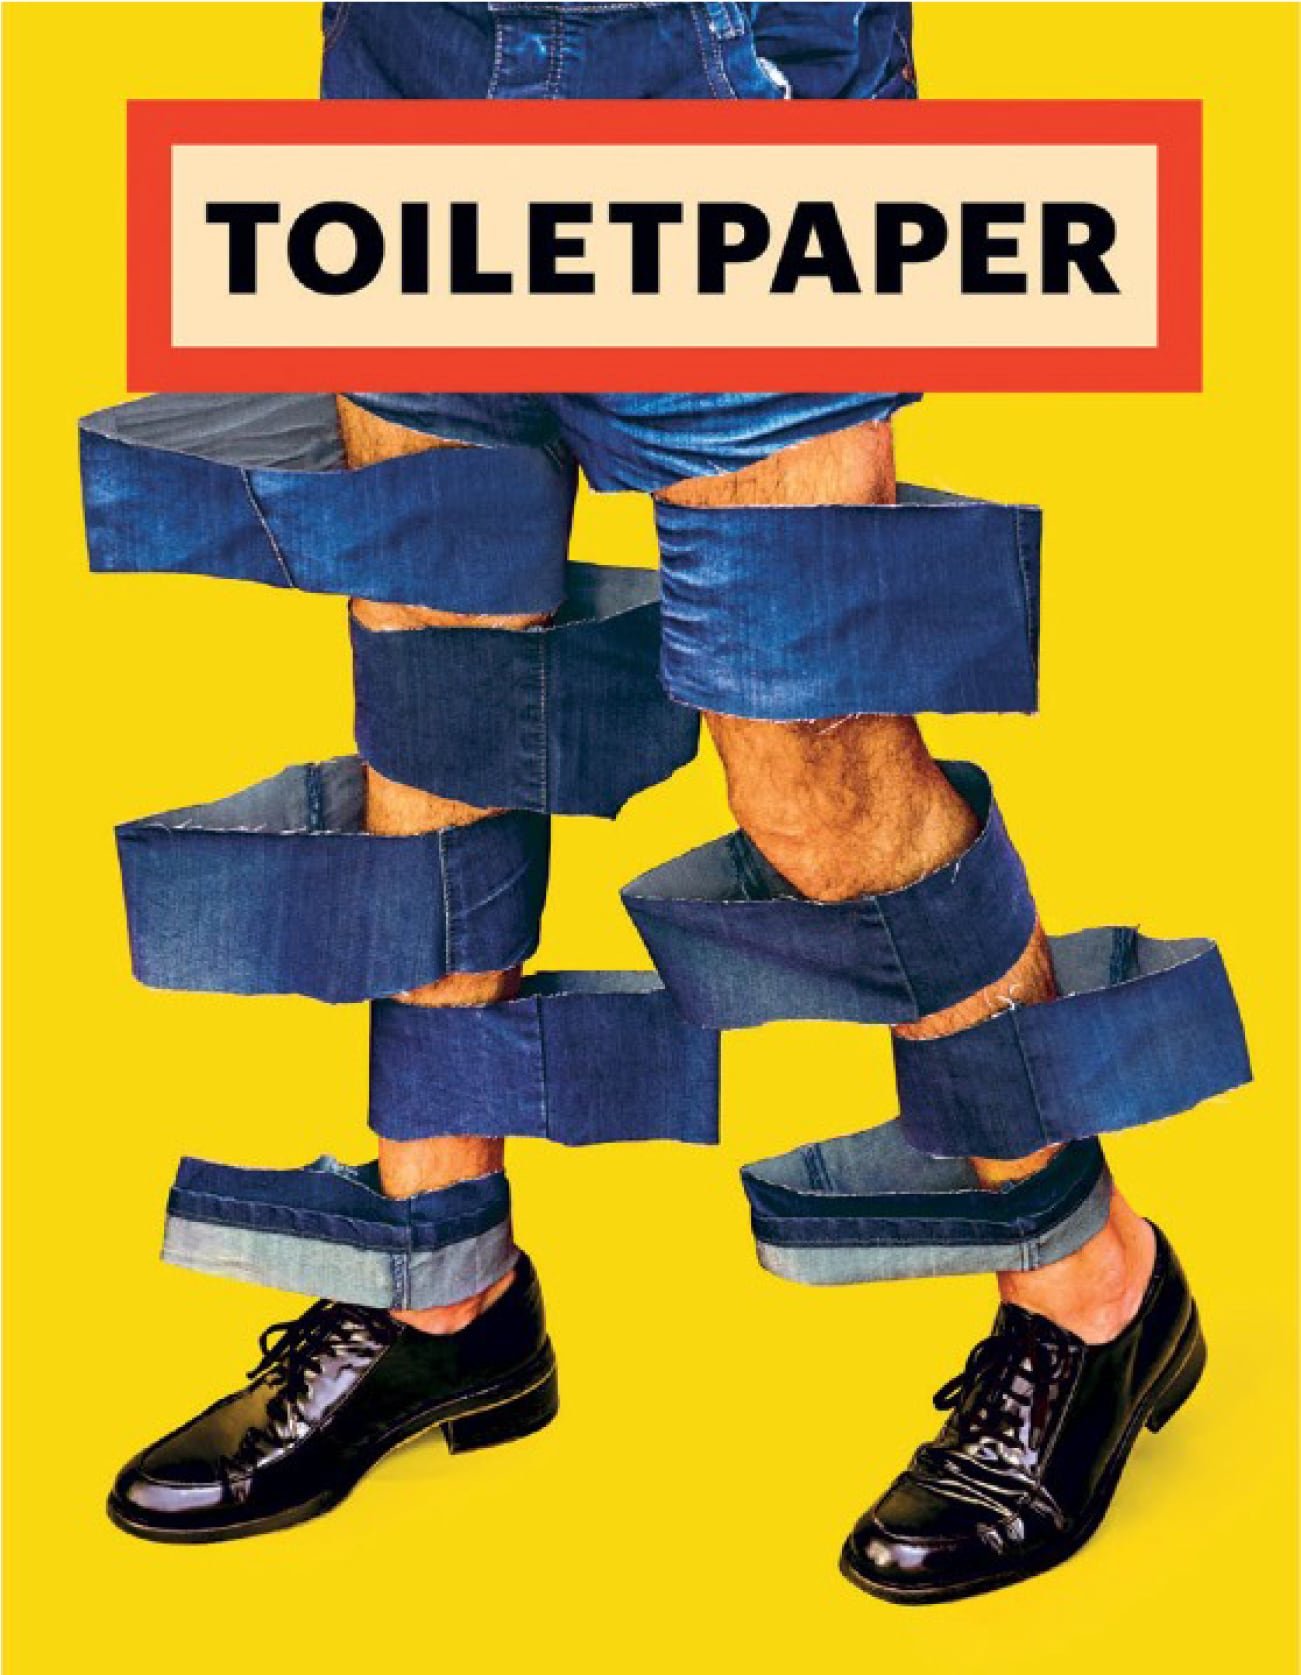 Toiletpaper magazine18.jpg